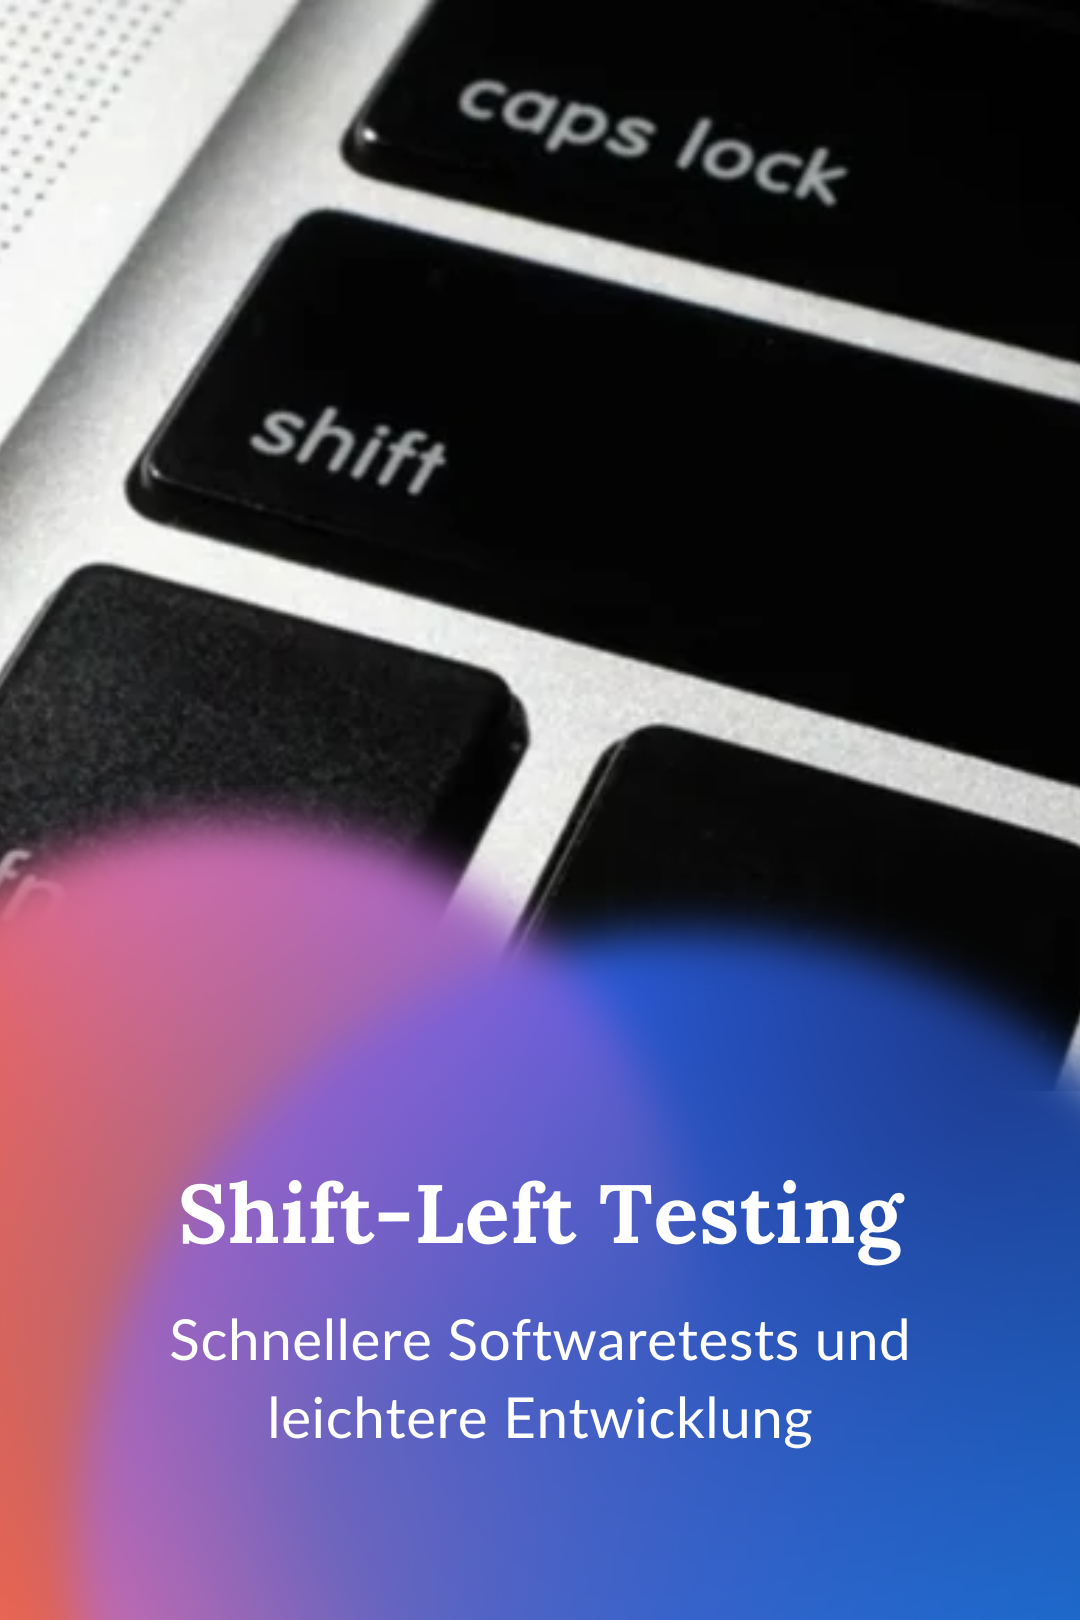 Vorschau Blog Shift-Left-Testing